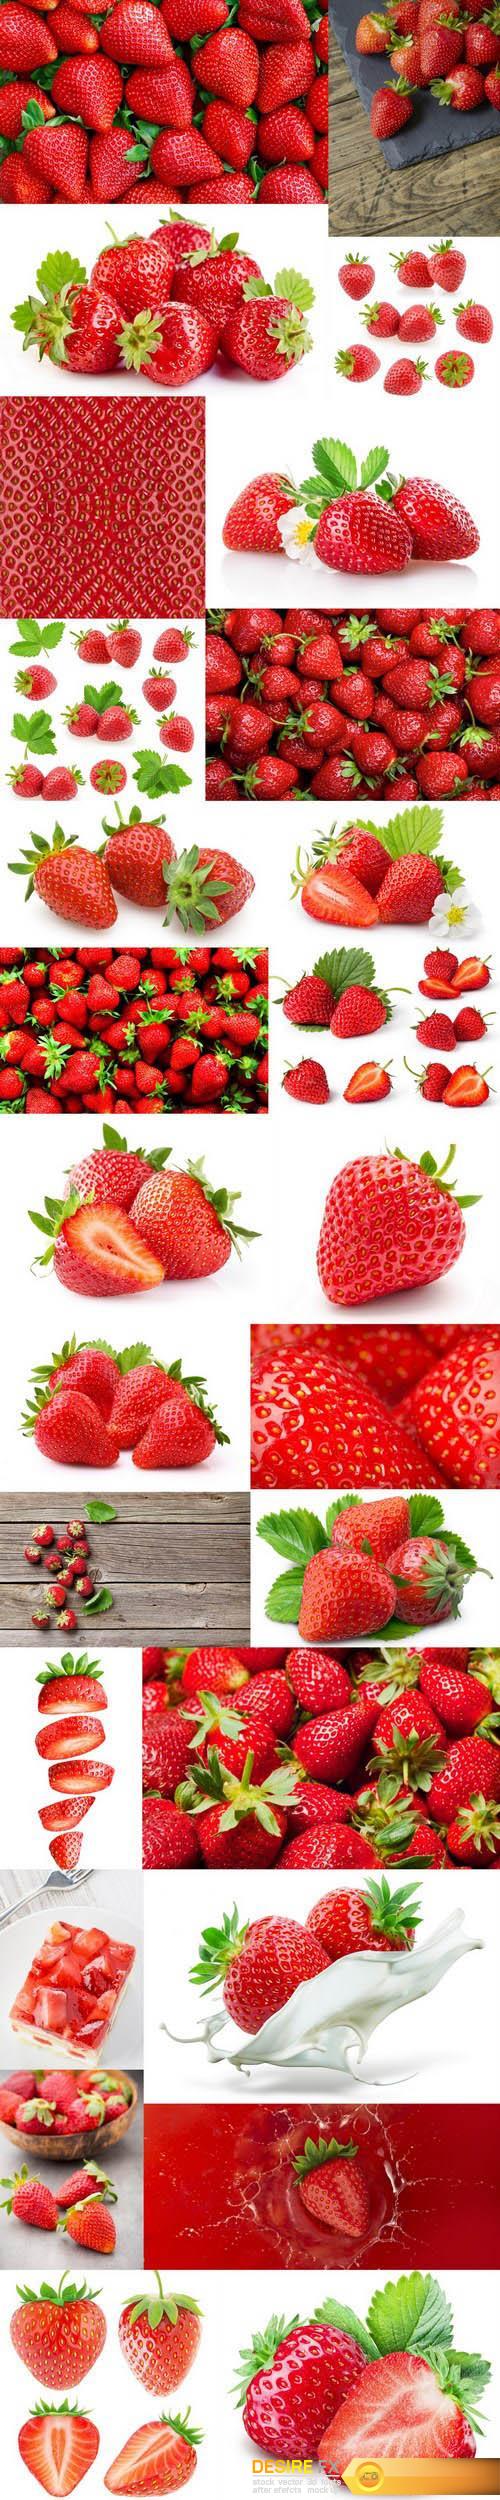 Juicy Strawberry 2 - 26xUHQ JPEG